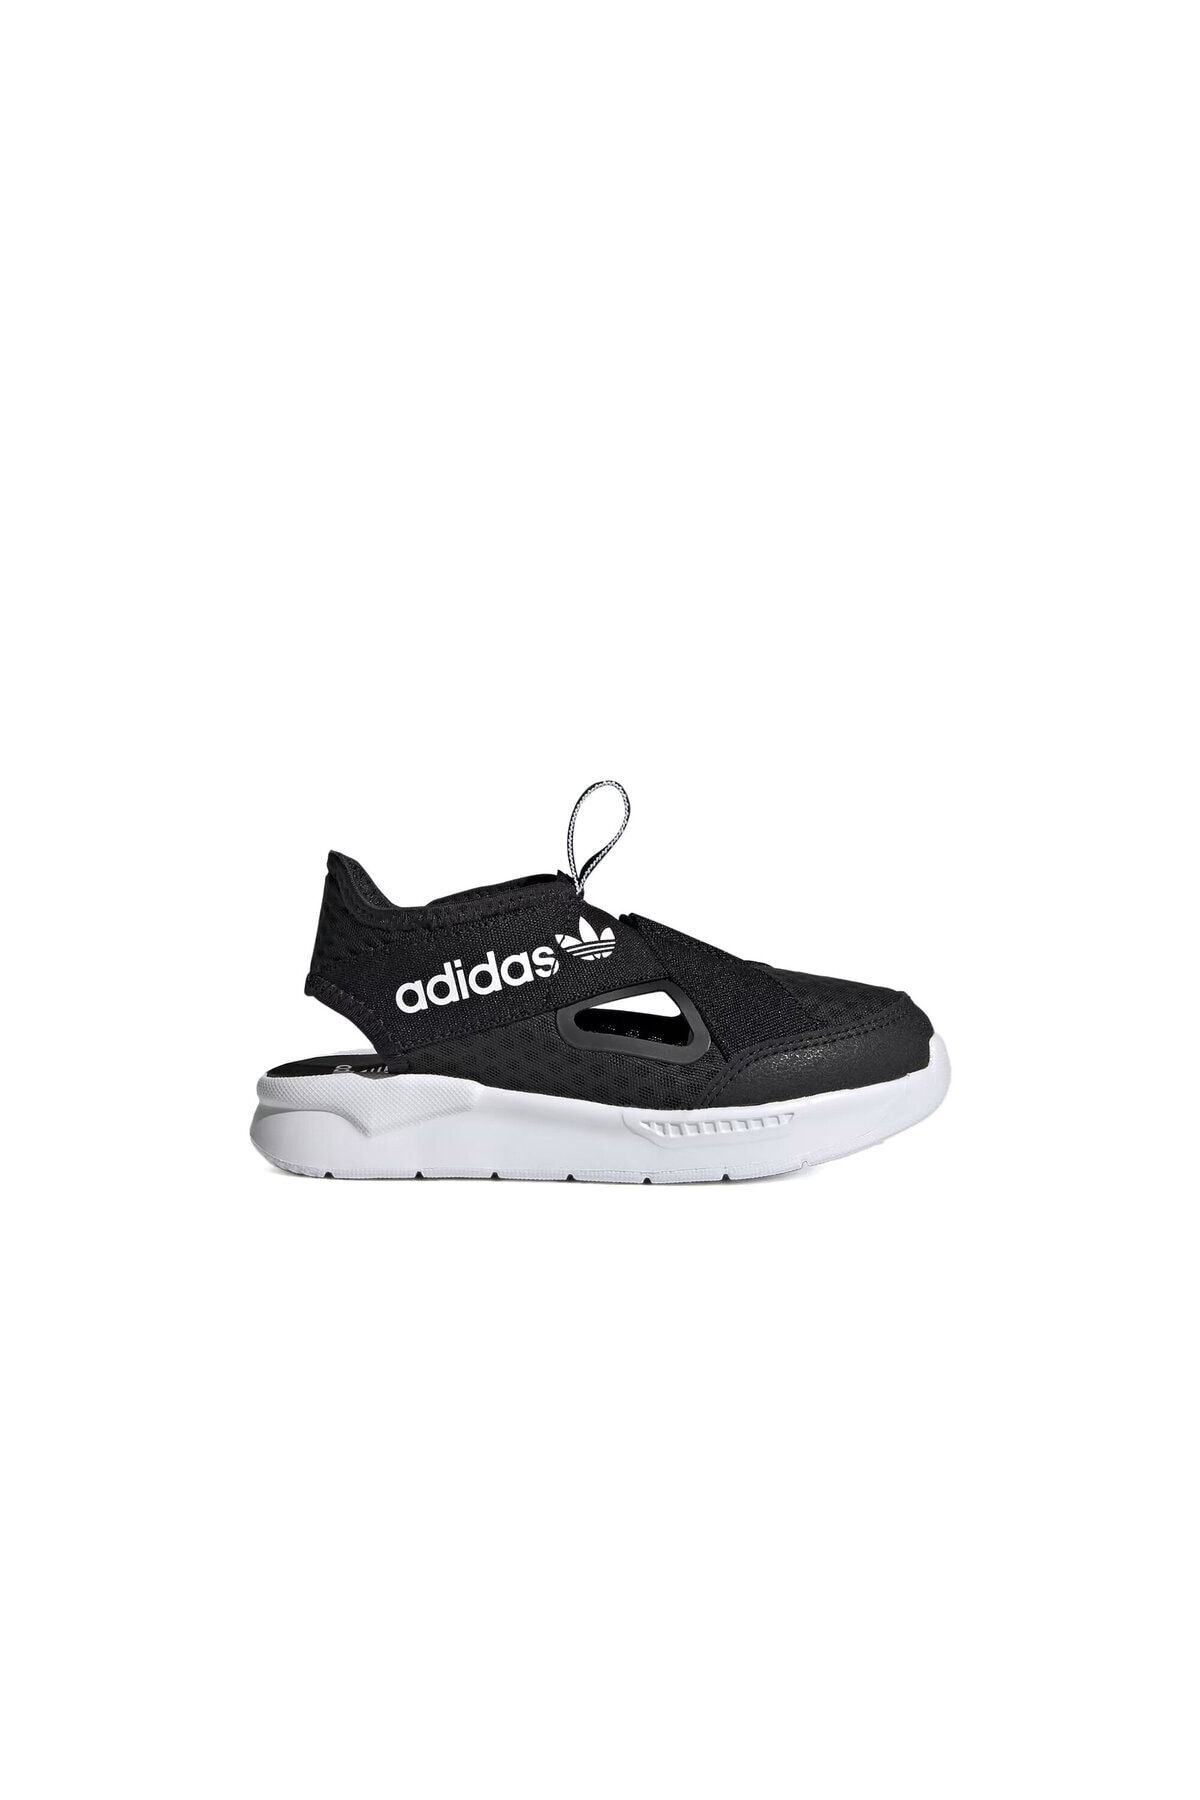 adidas 360 Sandal C Kids GX0861 Black